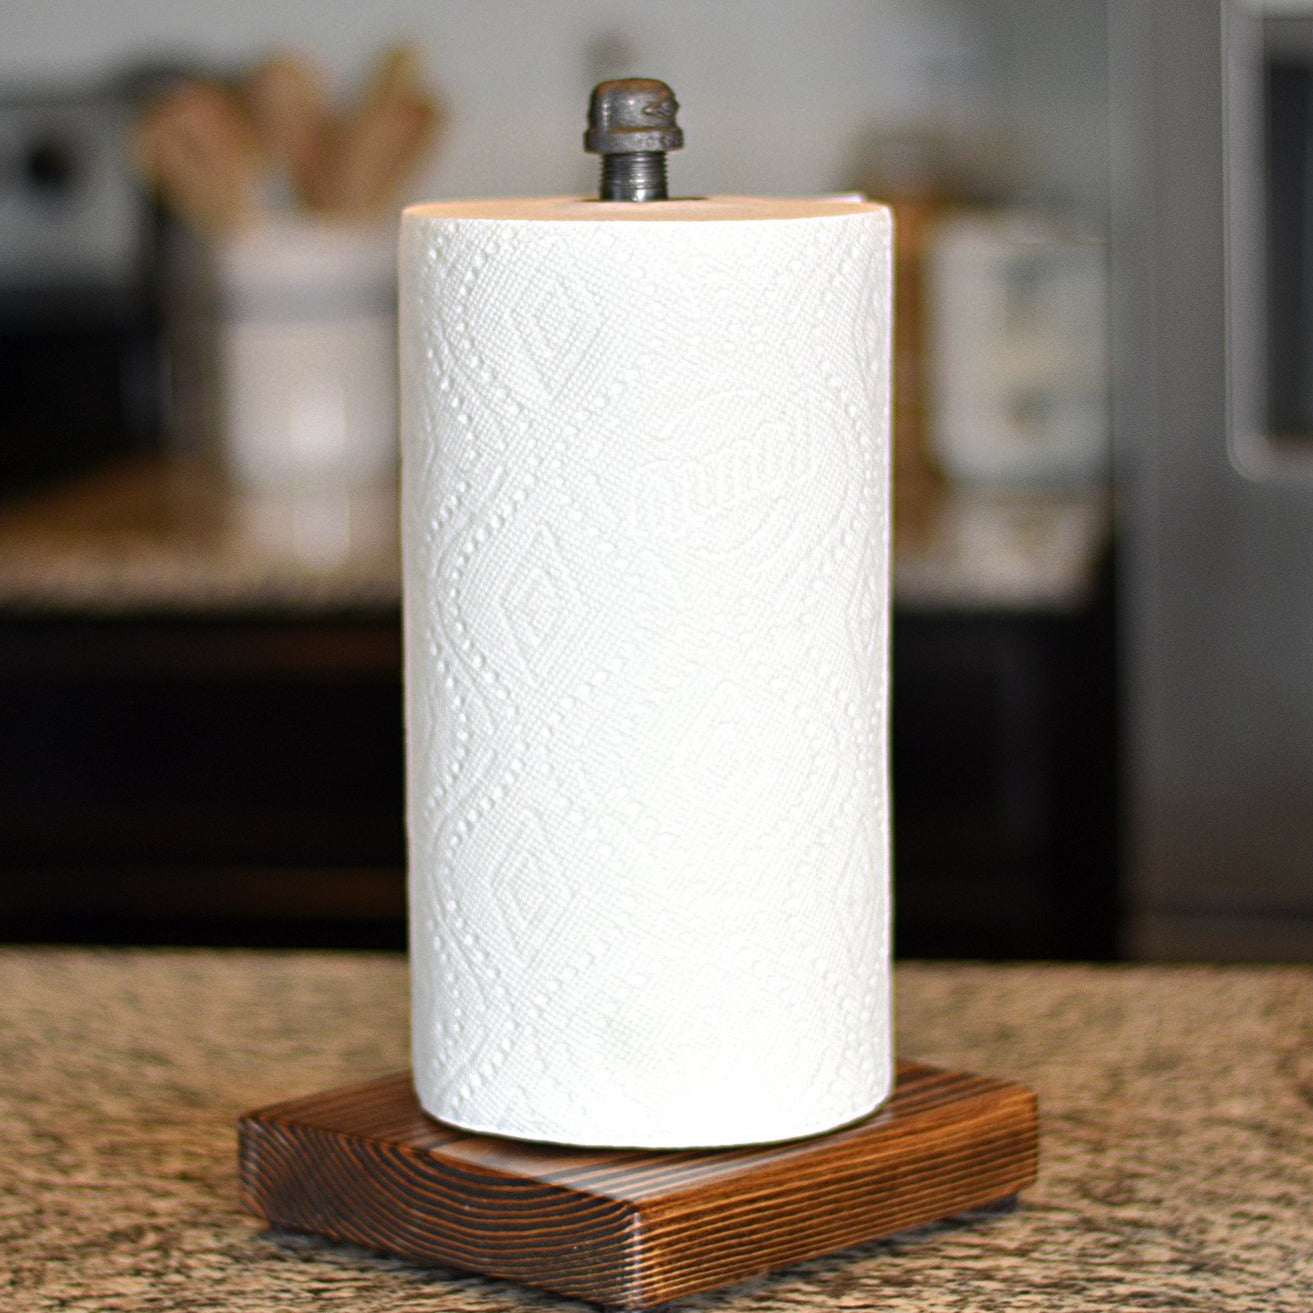 The Mitz Handmade Toilet Paper Holder - Industrial Farm Co